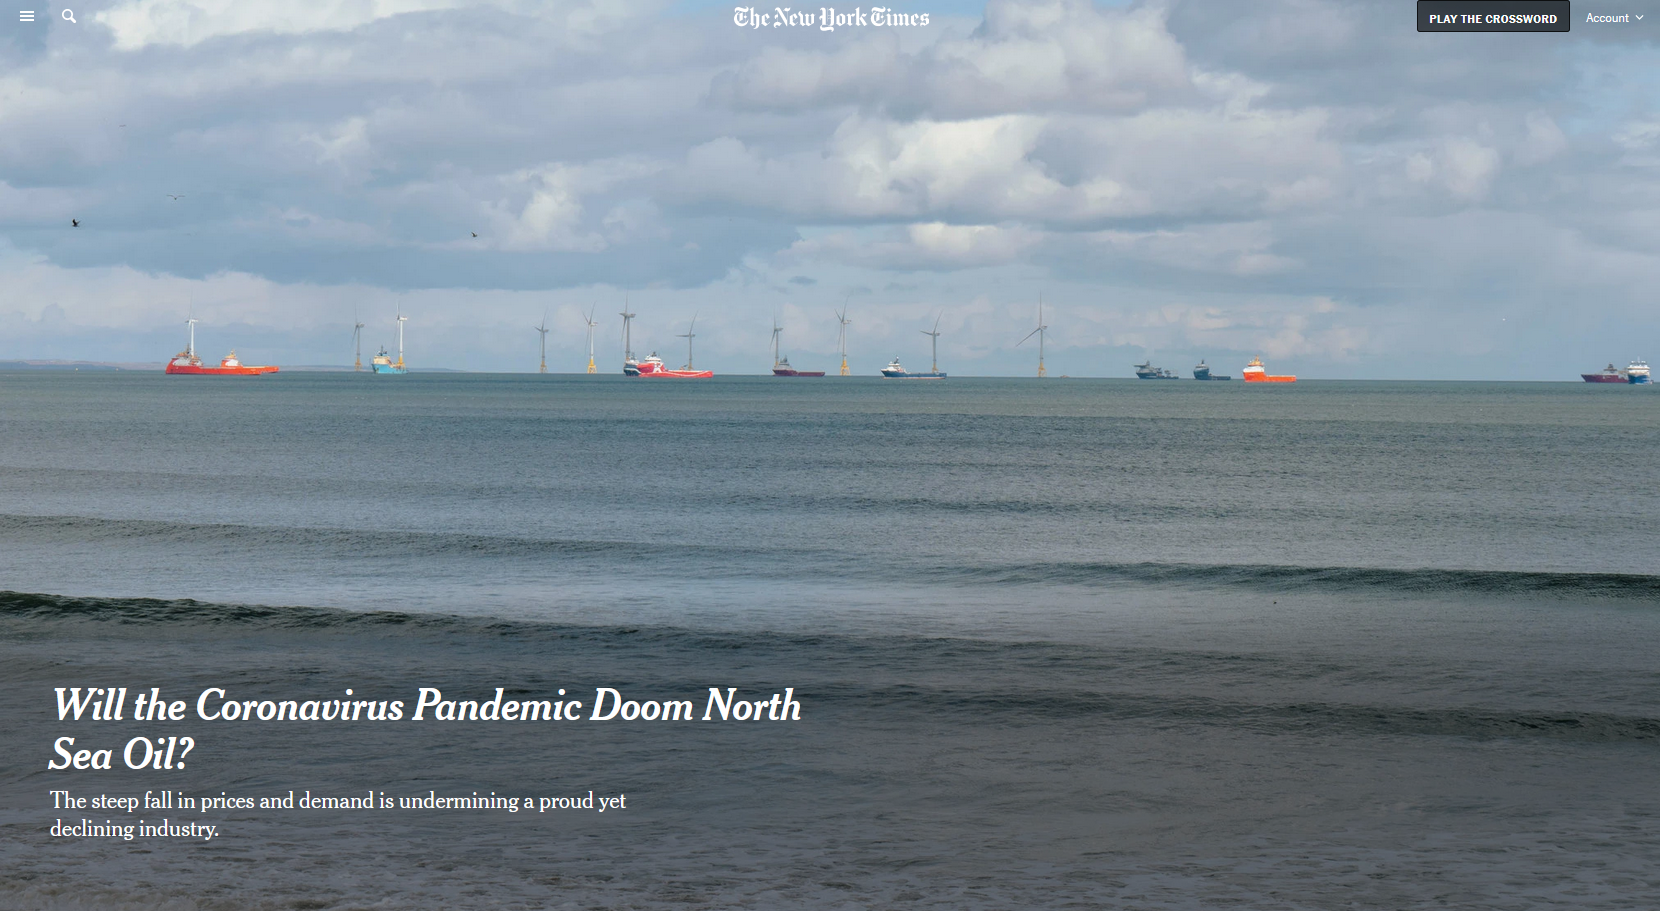 NYT: Will the Coronavirus Pandemic Doom North Sea Oil?